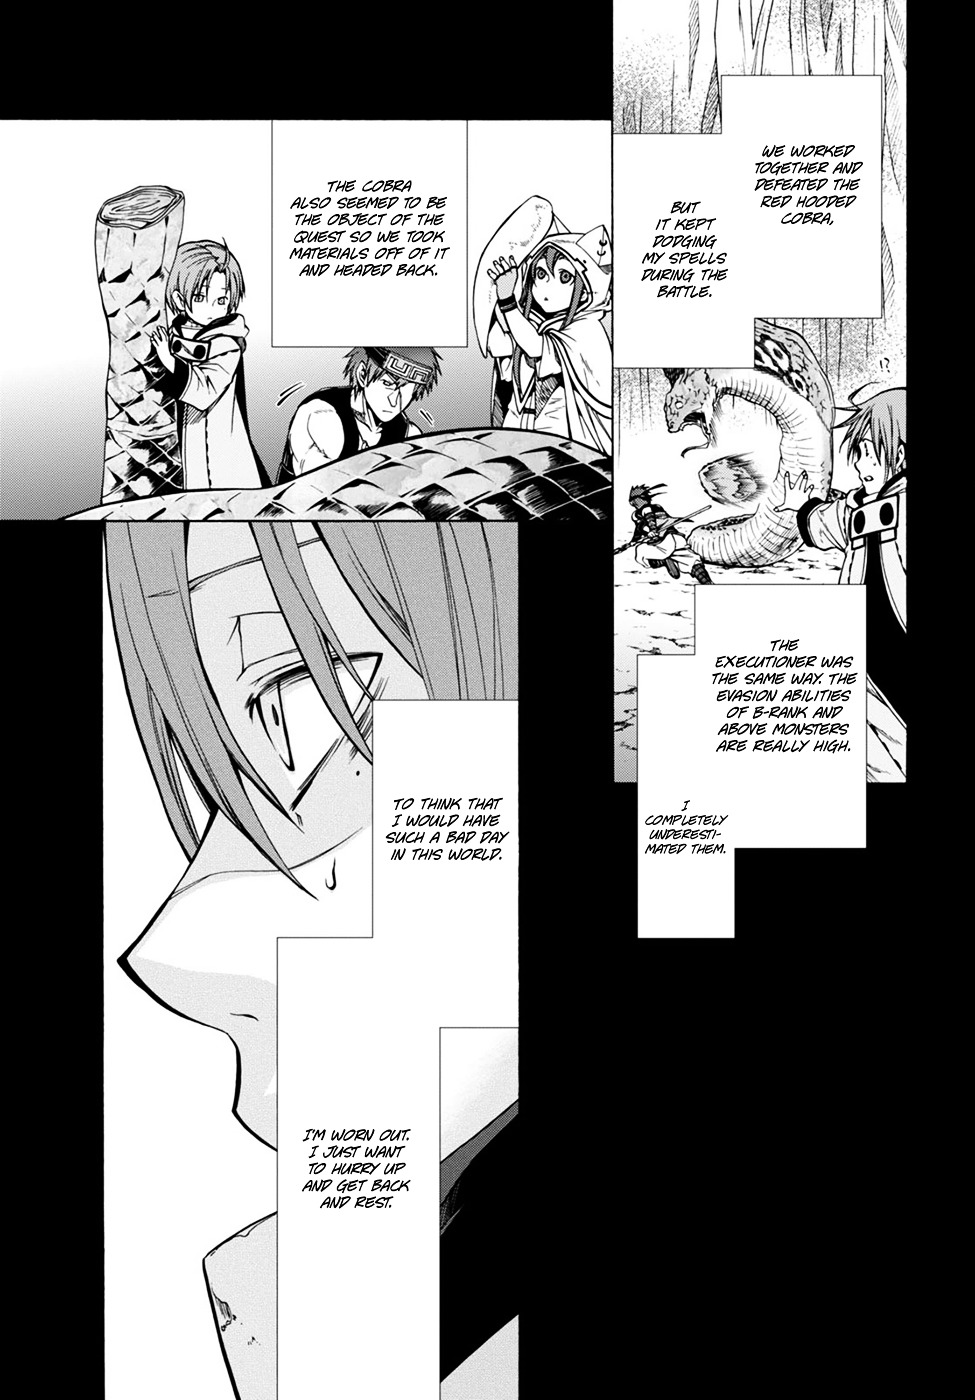 Mushoku Tensei: Jobless Reincarnation manga